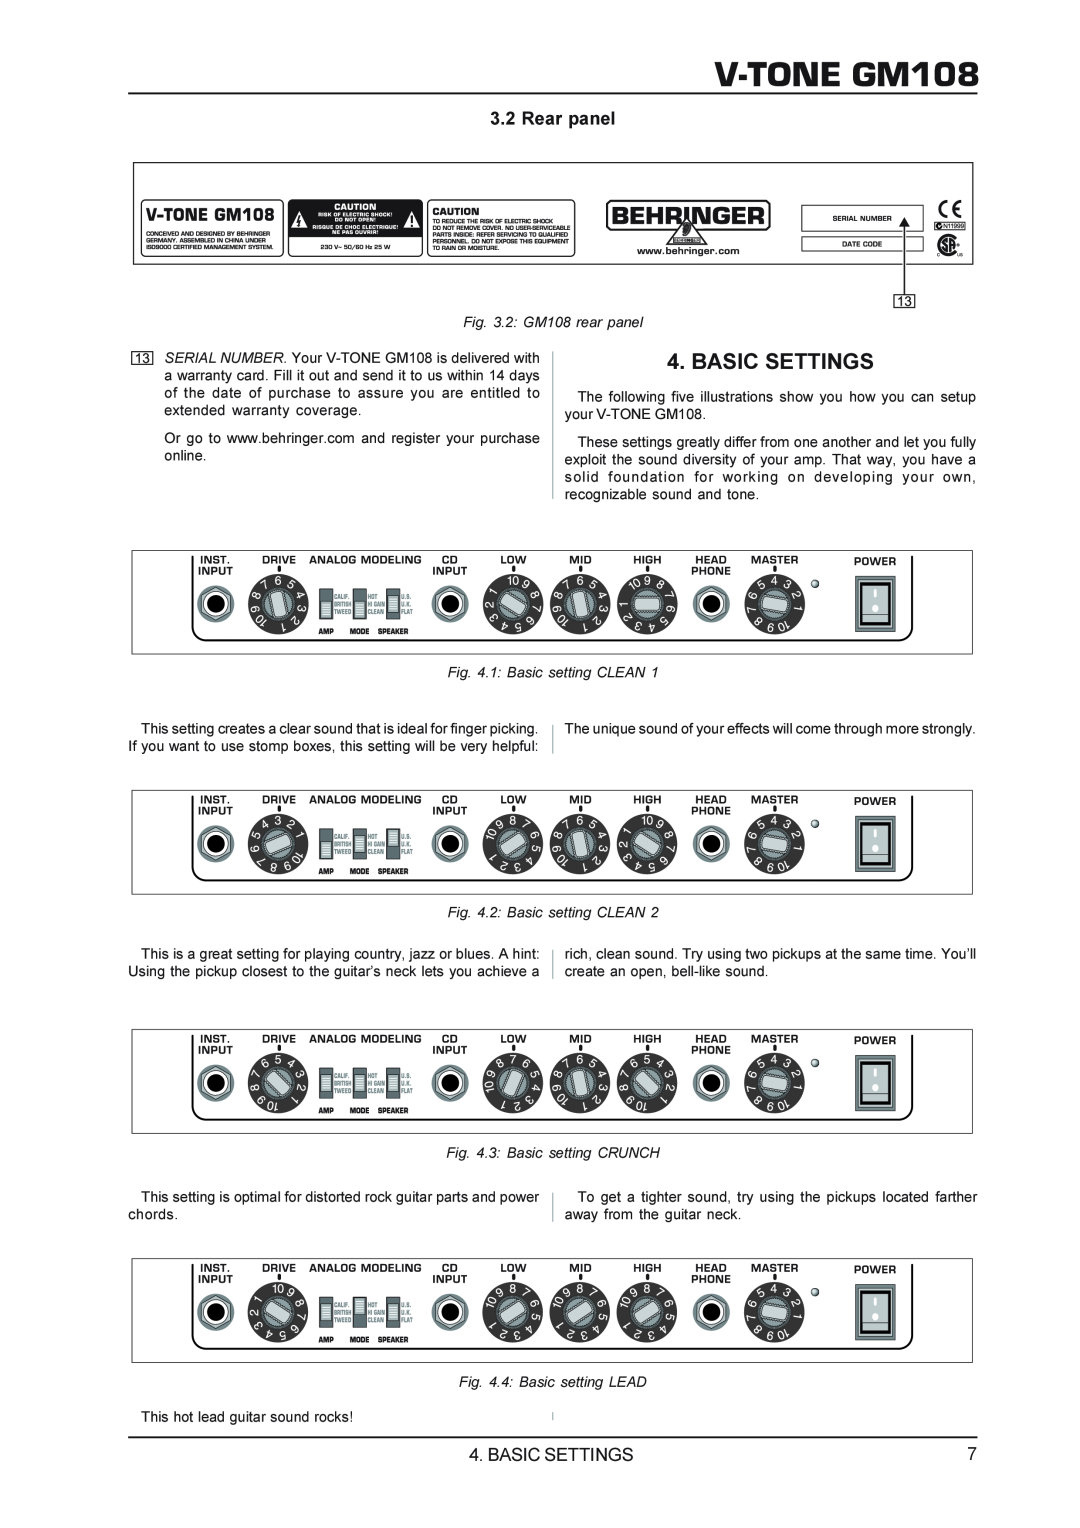 Behringer gm108 manual V-TONEGM108, Basic Settings, Rear panel 